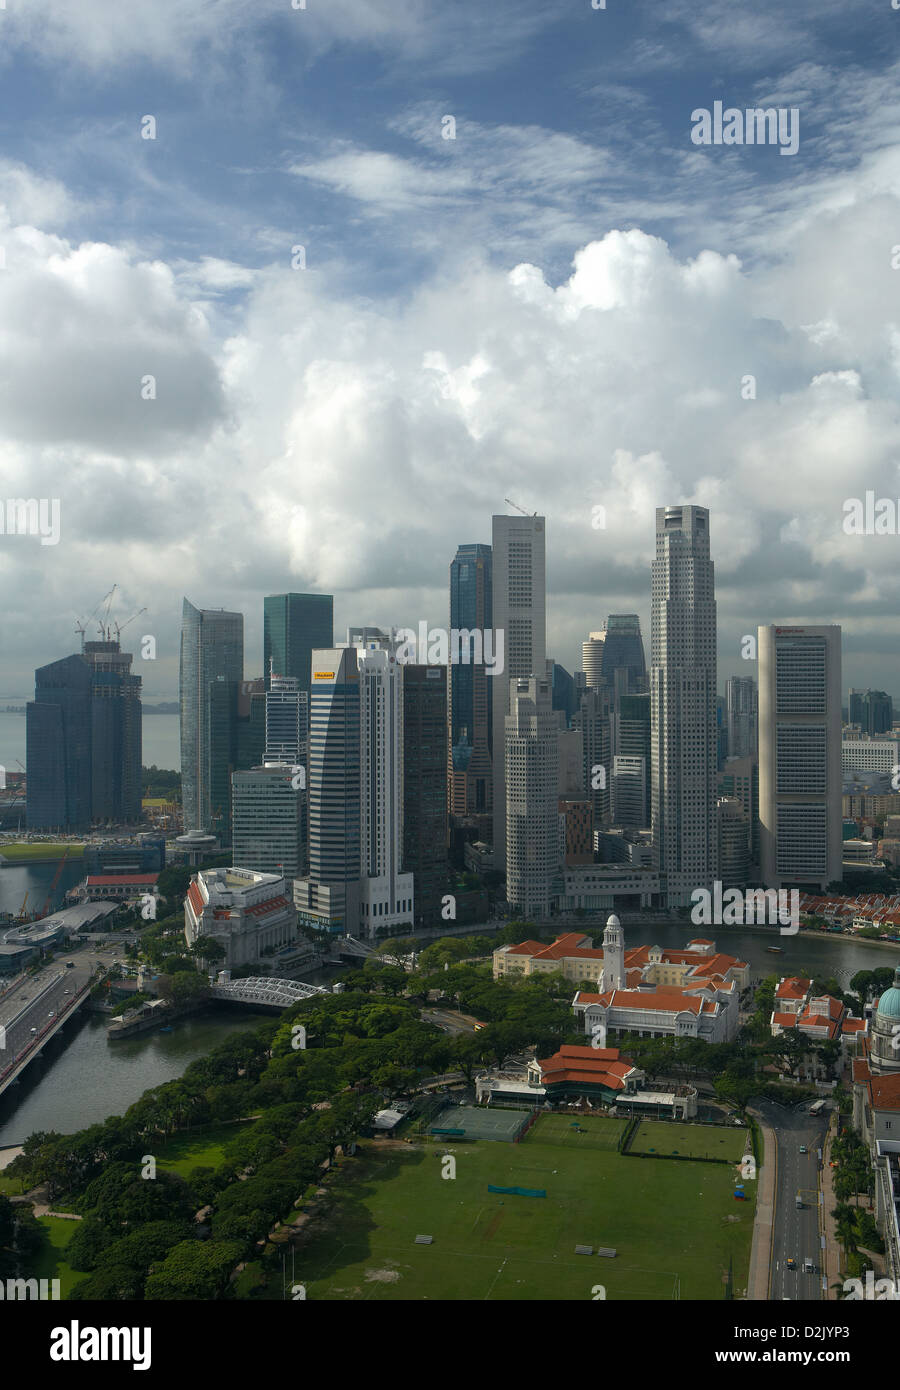 Singapore, Singapore, skyline of the financial district Stock Photo